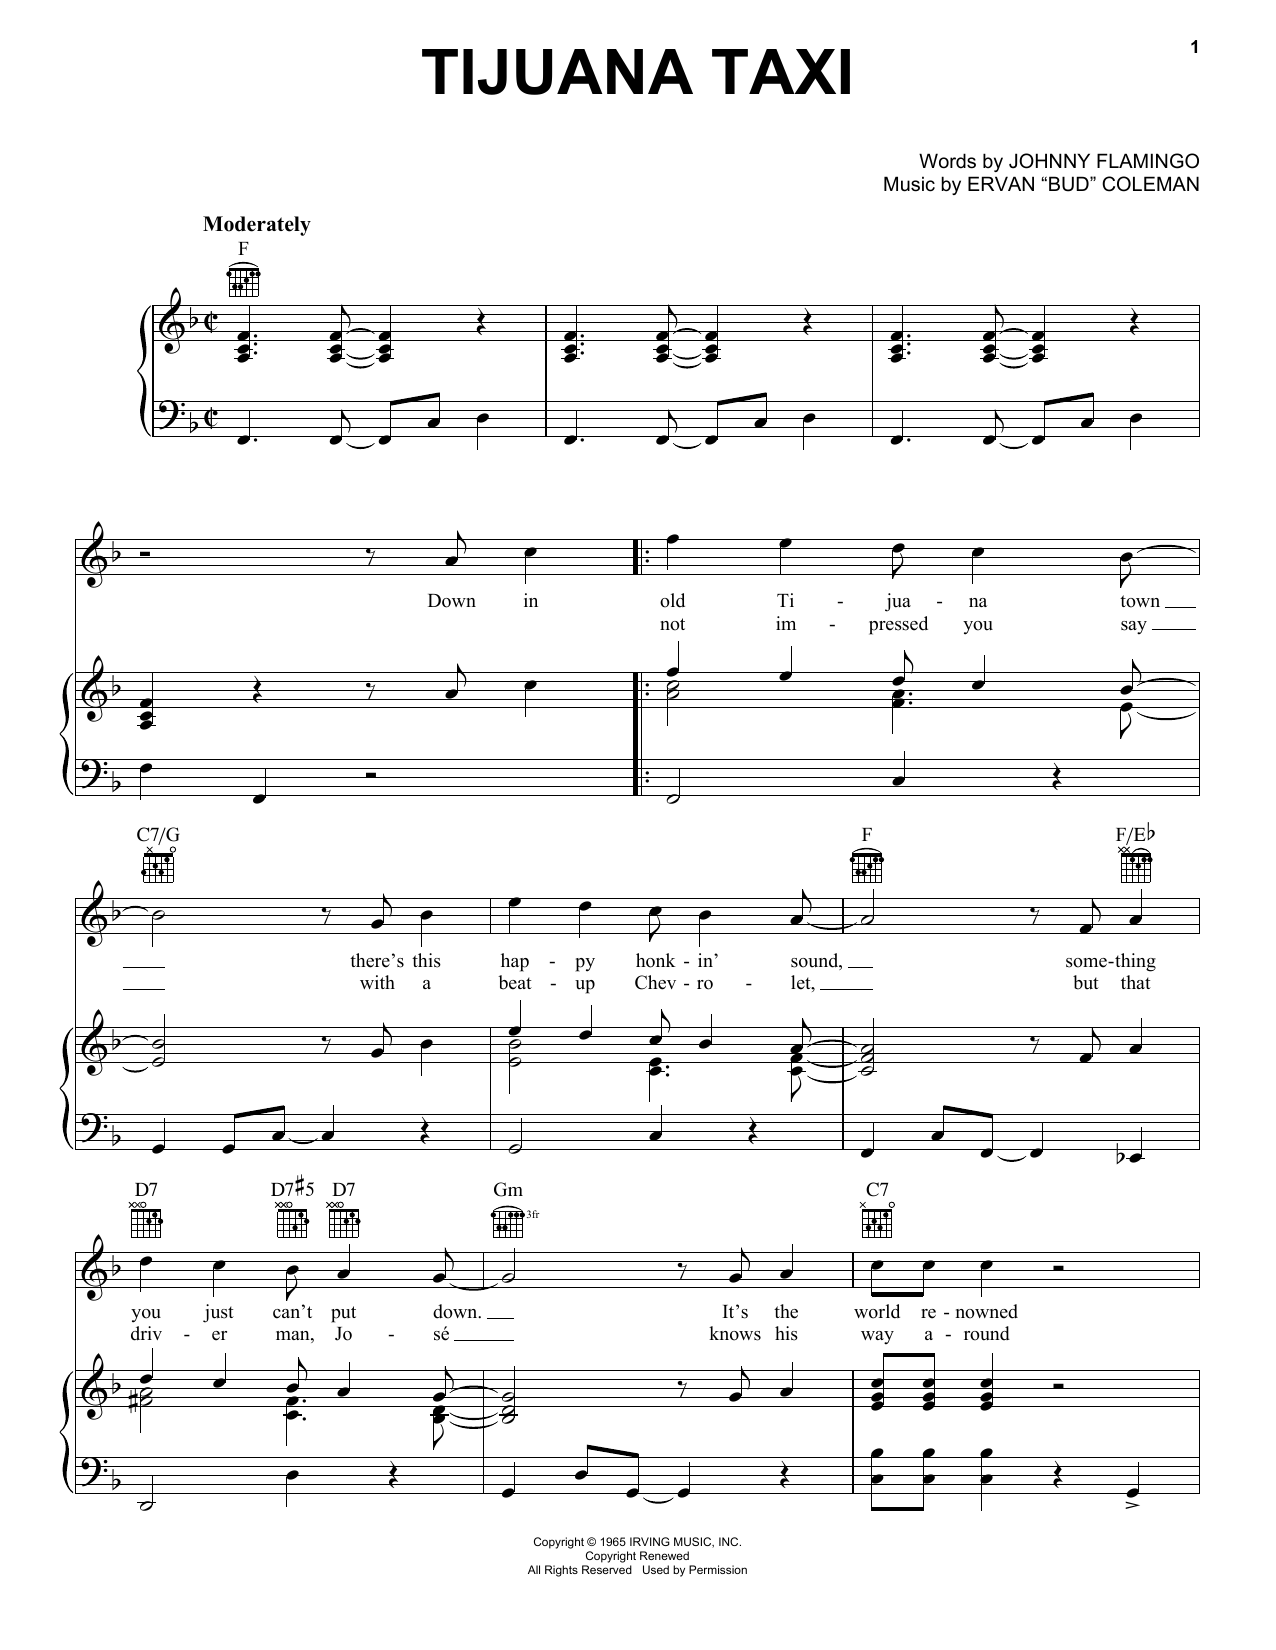 Herb Alpert & The Tijuana Brass Band Tijuana Taxi Sheet Music Notes & Chords for Trumpet - Download or Print PDF